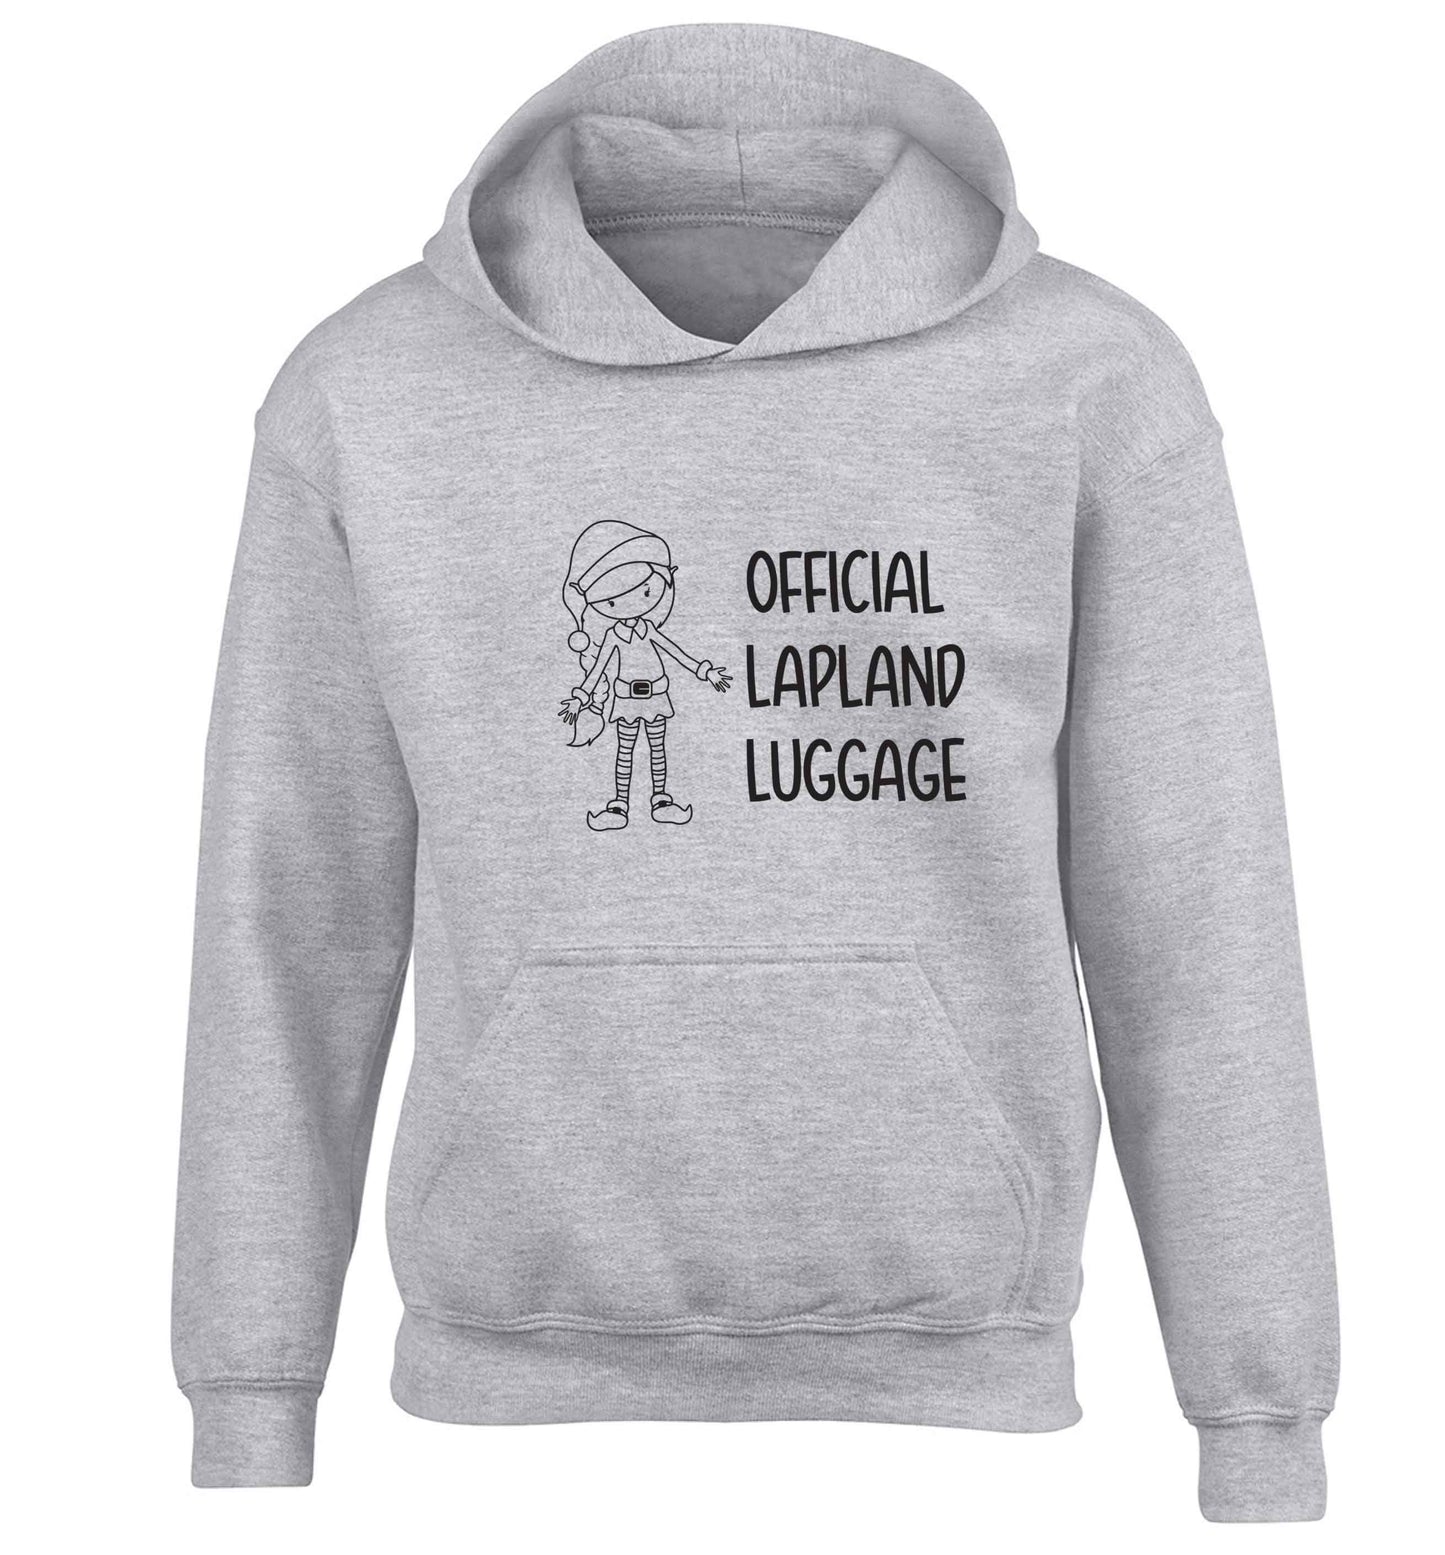 Official lapland luggage - Elf snowflake children's grey hoodie 12-13 Years